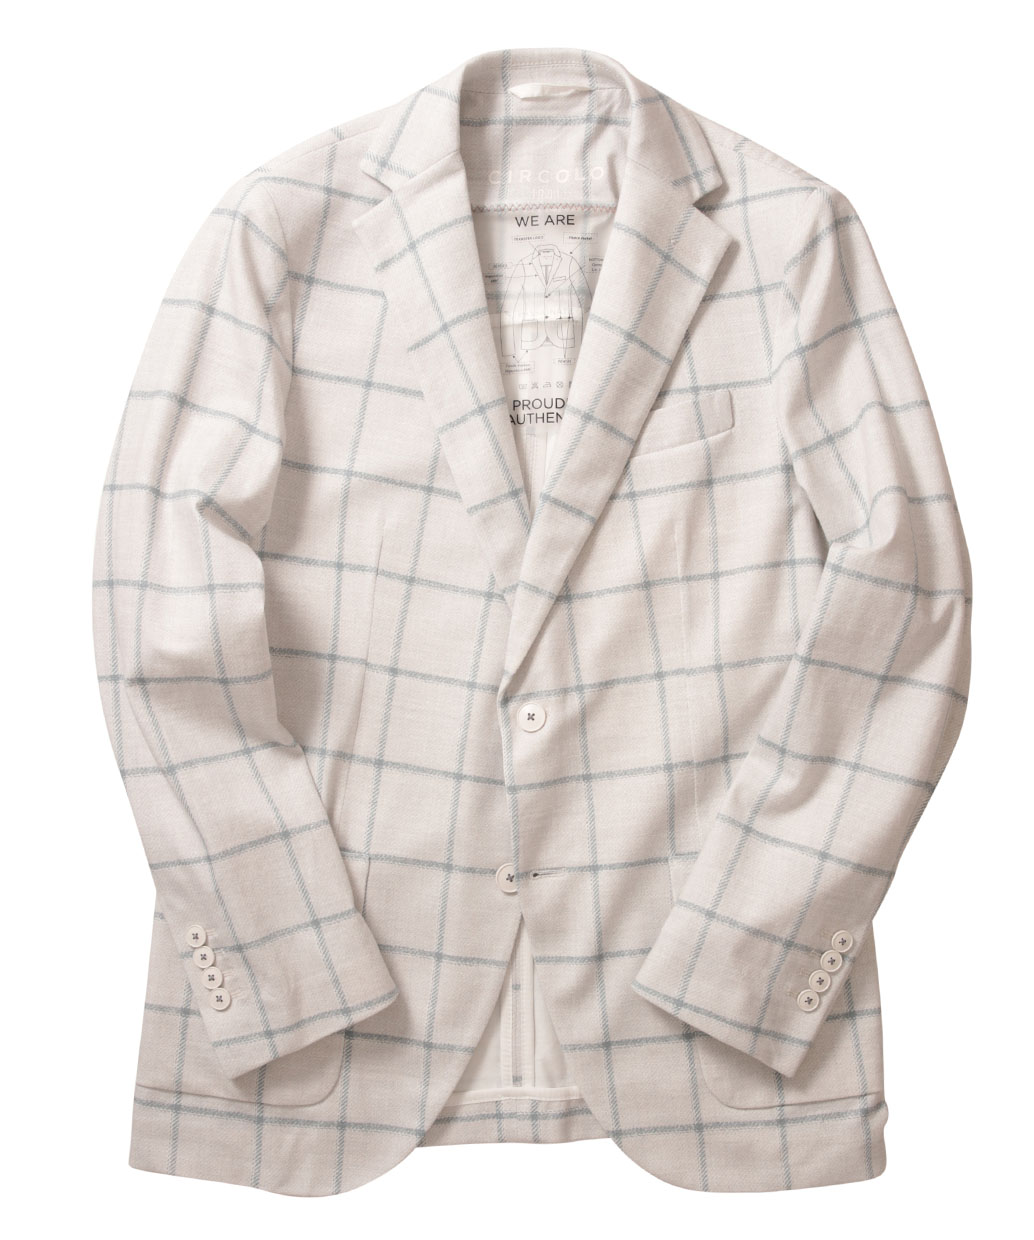 CIRCOLO 1901〈チルコロ 1901〉Men'sのジャケット